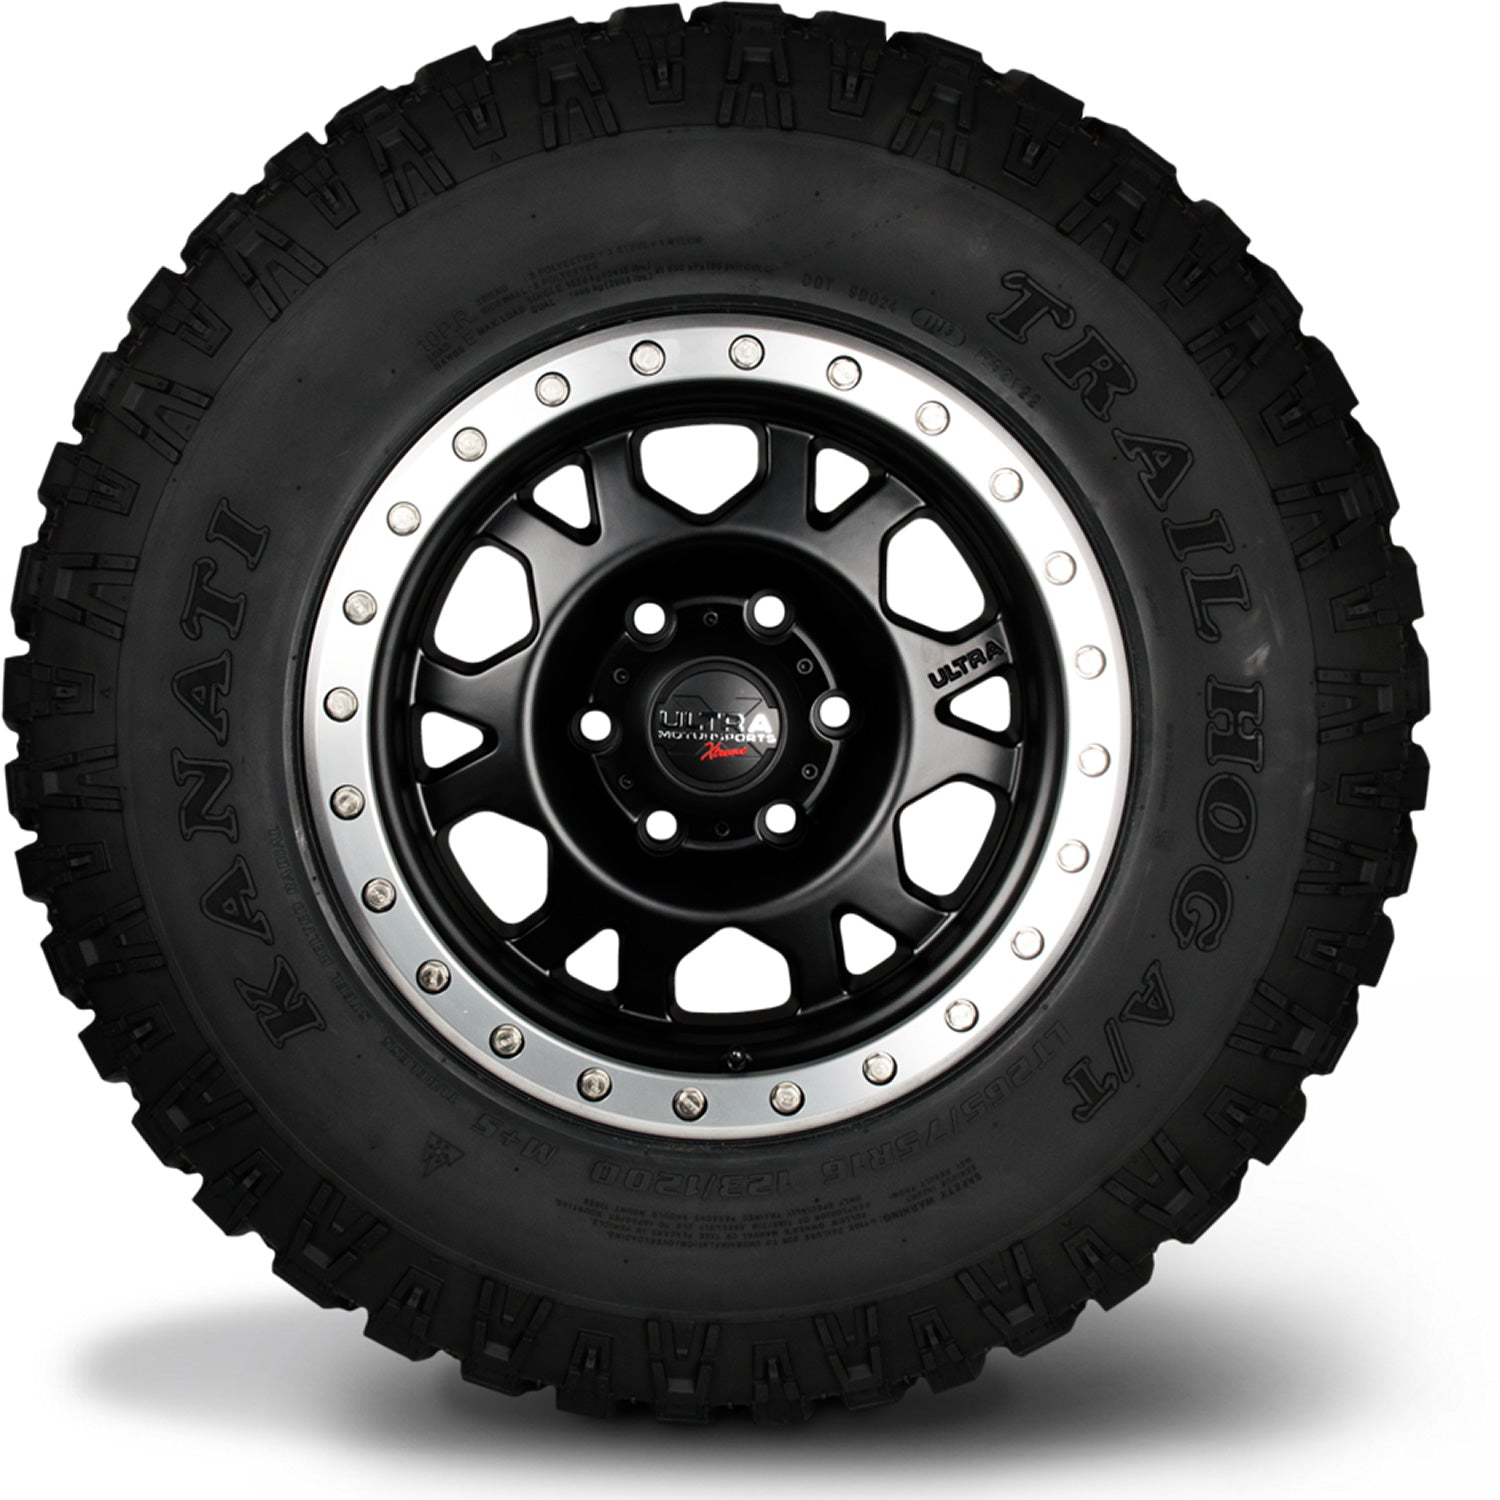 KANATI TRAIL HOG LT275/65R18 (32.1X10.8R 18) Tires